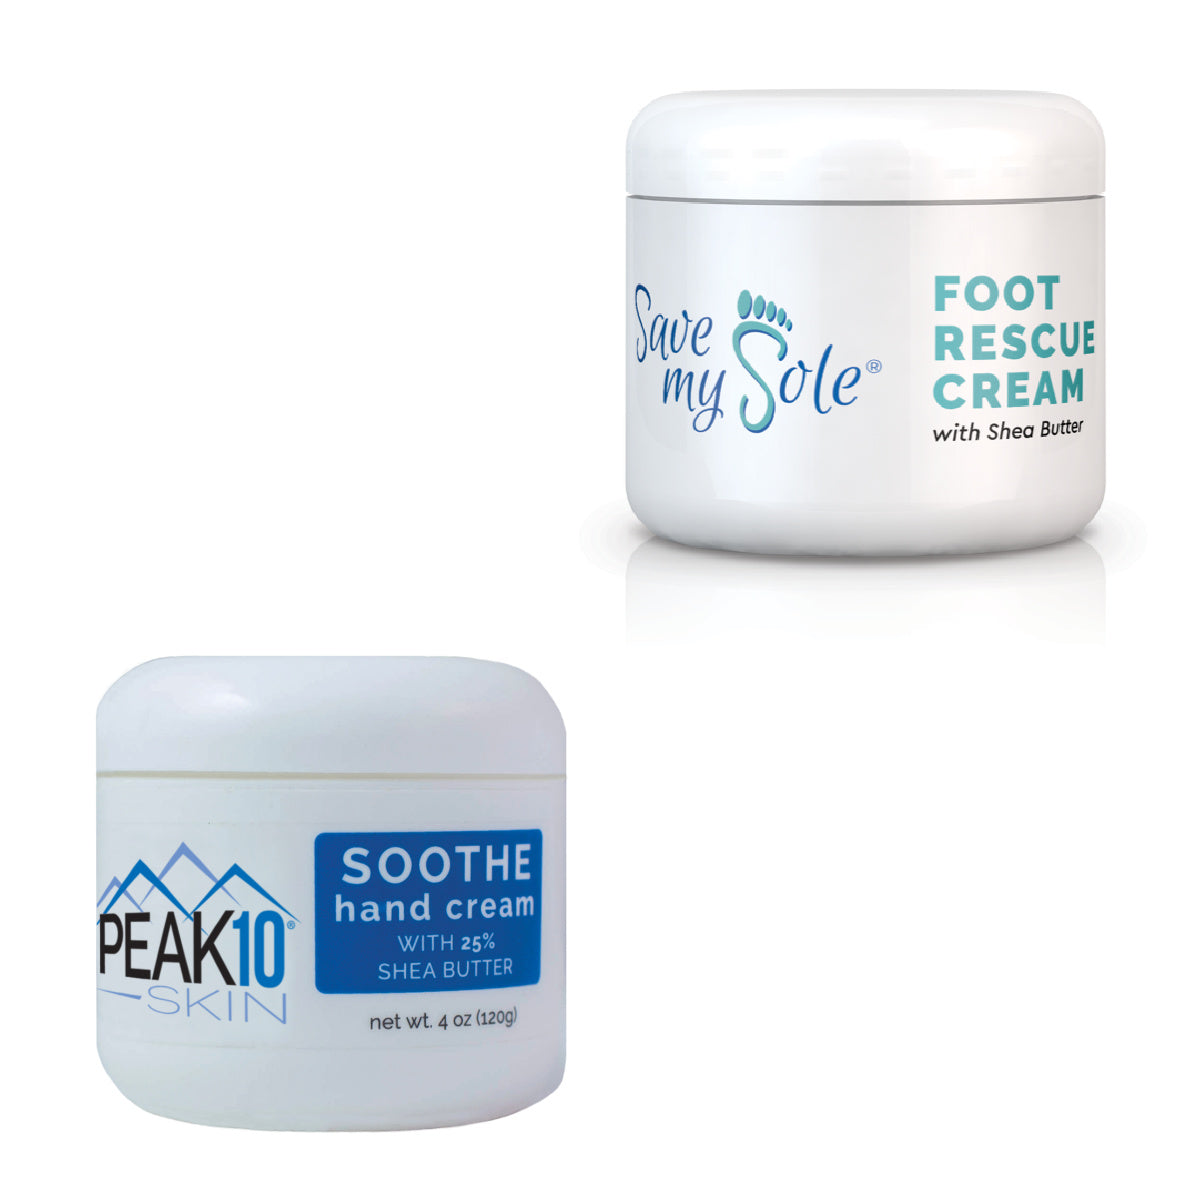 Save my Sole Foot Cream and PEAK 10 Hand Cream Duo